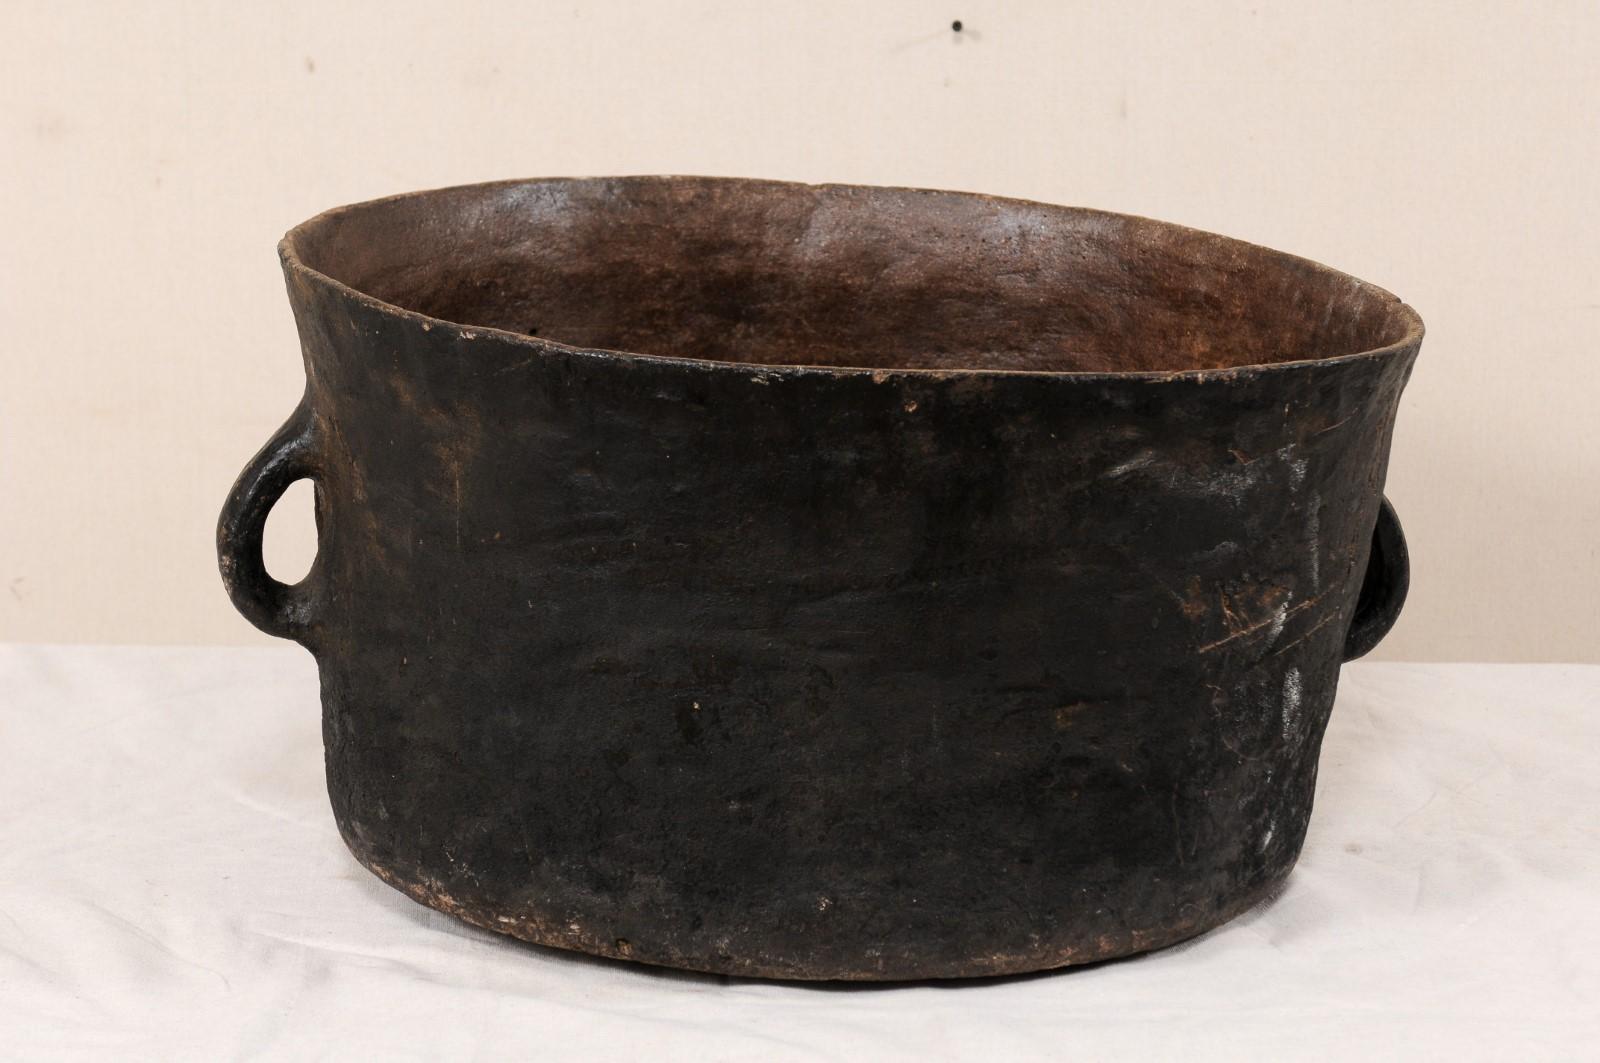 Guatemalan Large 19th Century Spanish Colonial Clay Pot or Vessel from Sacoj, Guatemala